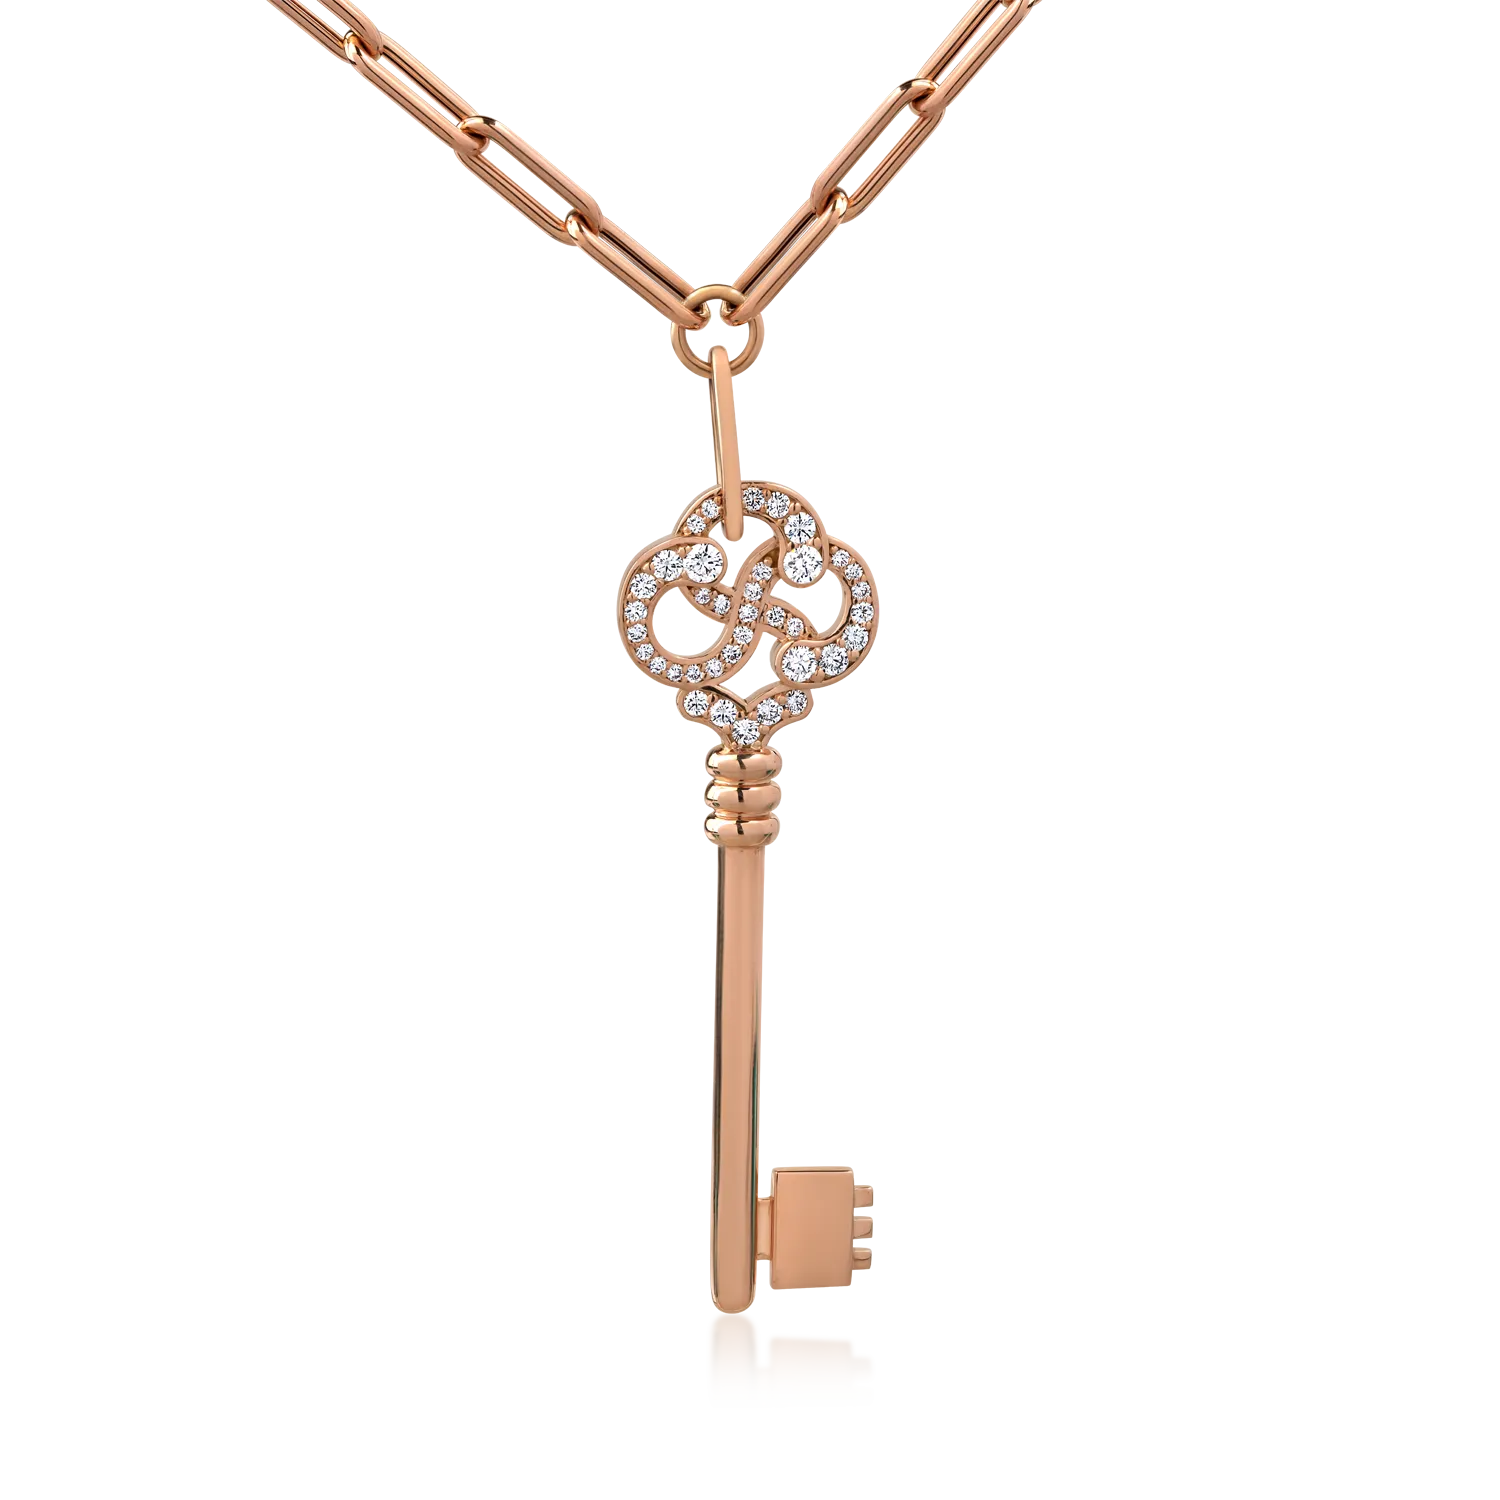 18K rose gold key pendant necklace with 0.66ct diamonds